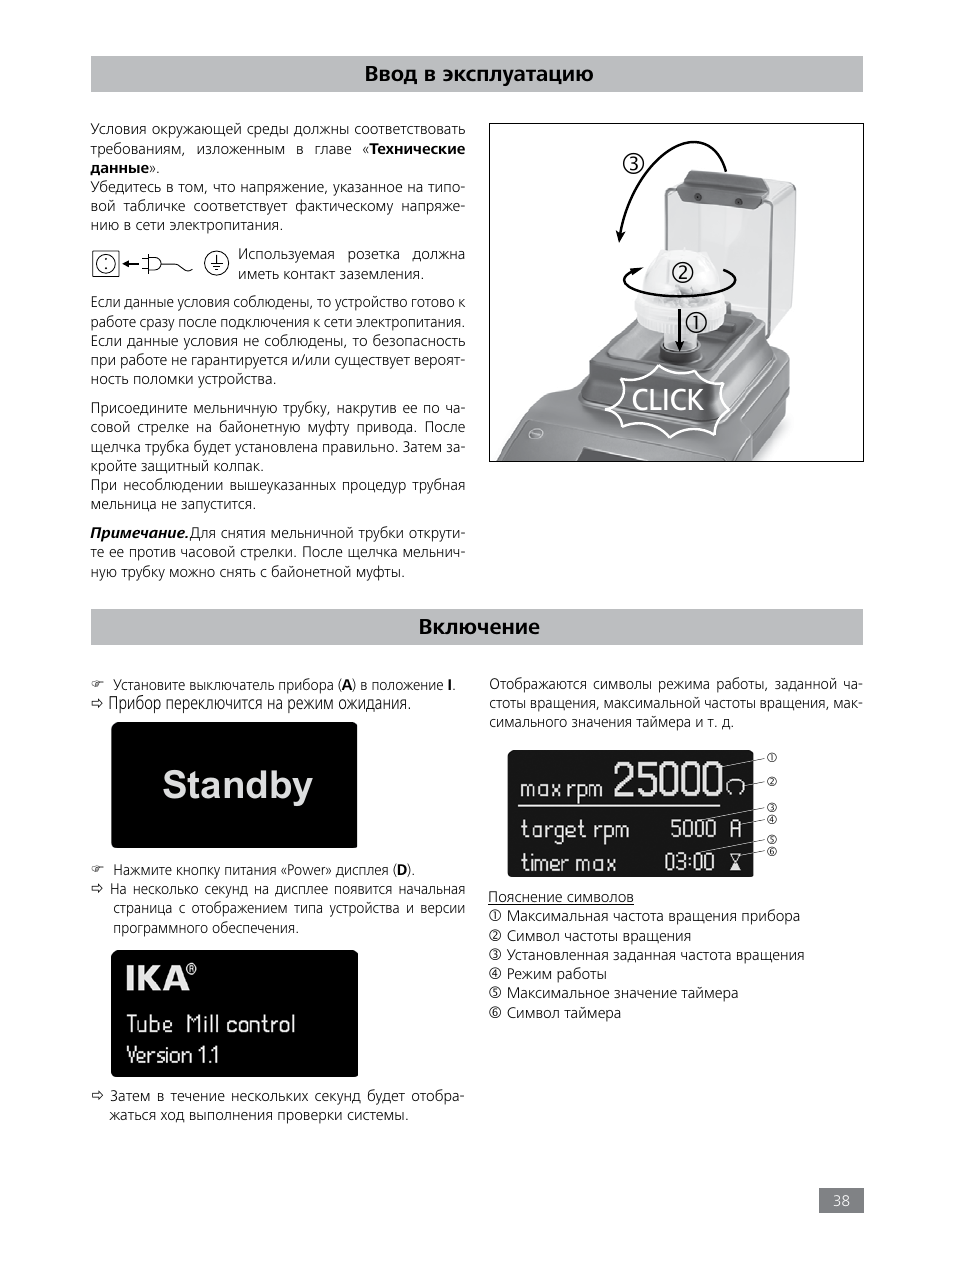 Standby, Click, Ввод в эксплуатацию | Включение | IKA Tube Mill control User Manual | Page 38 / 64